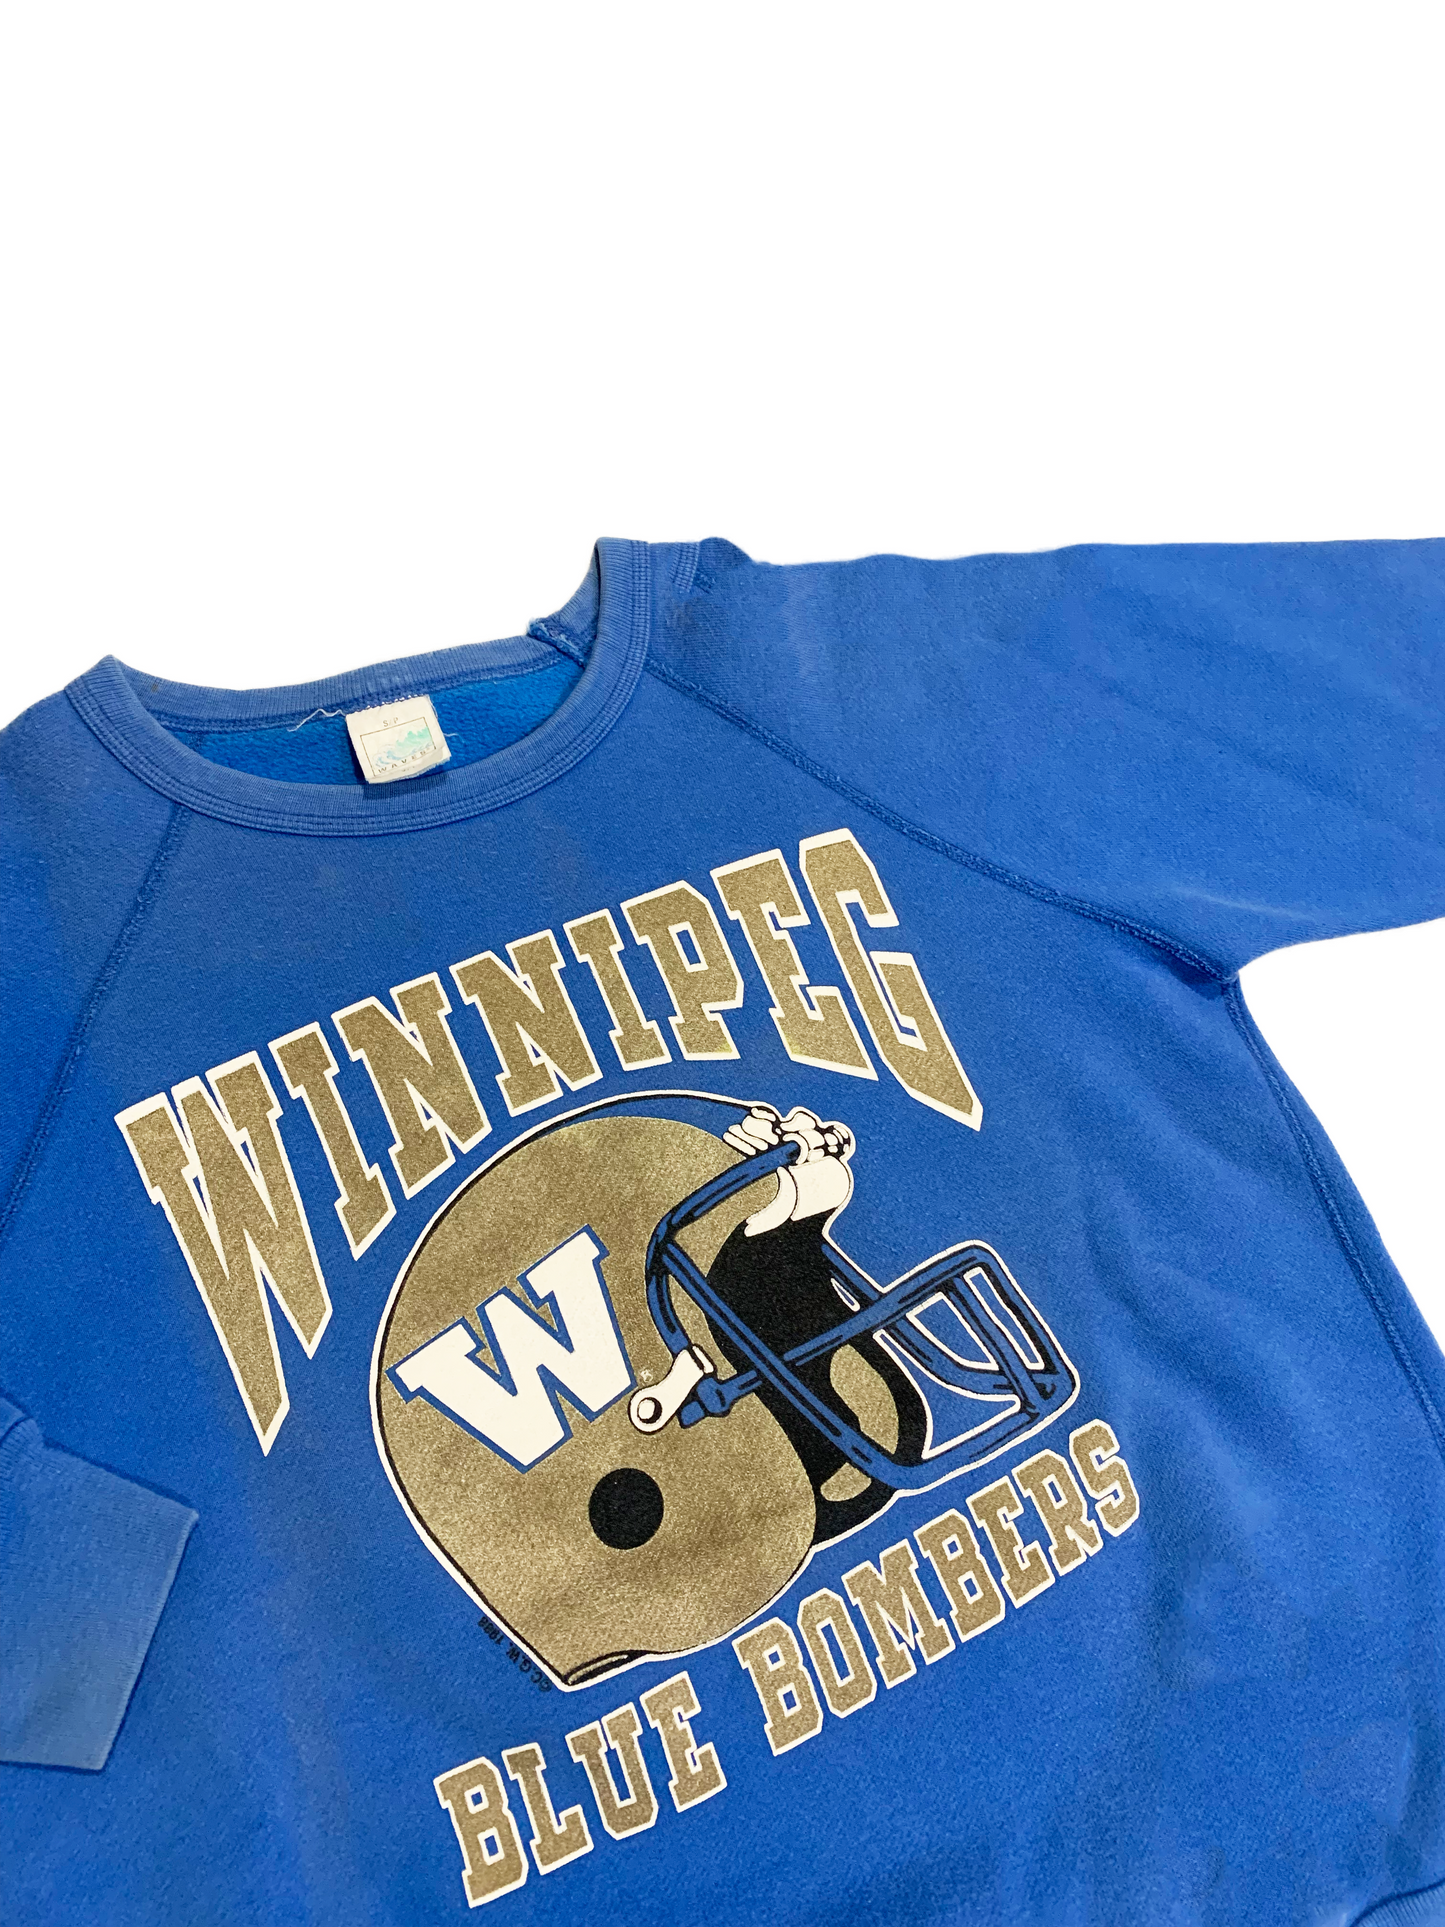 Winnipeg Blue Bombers Crewneck